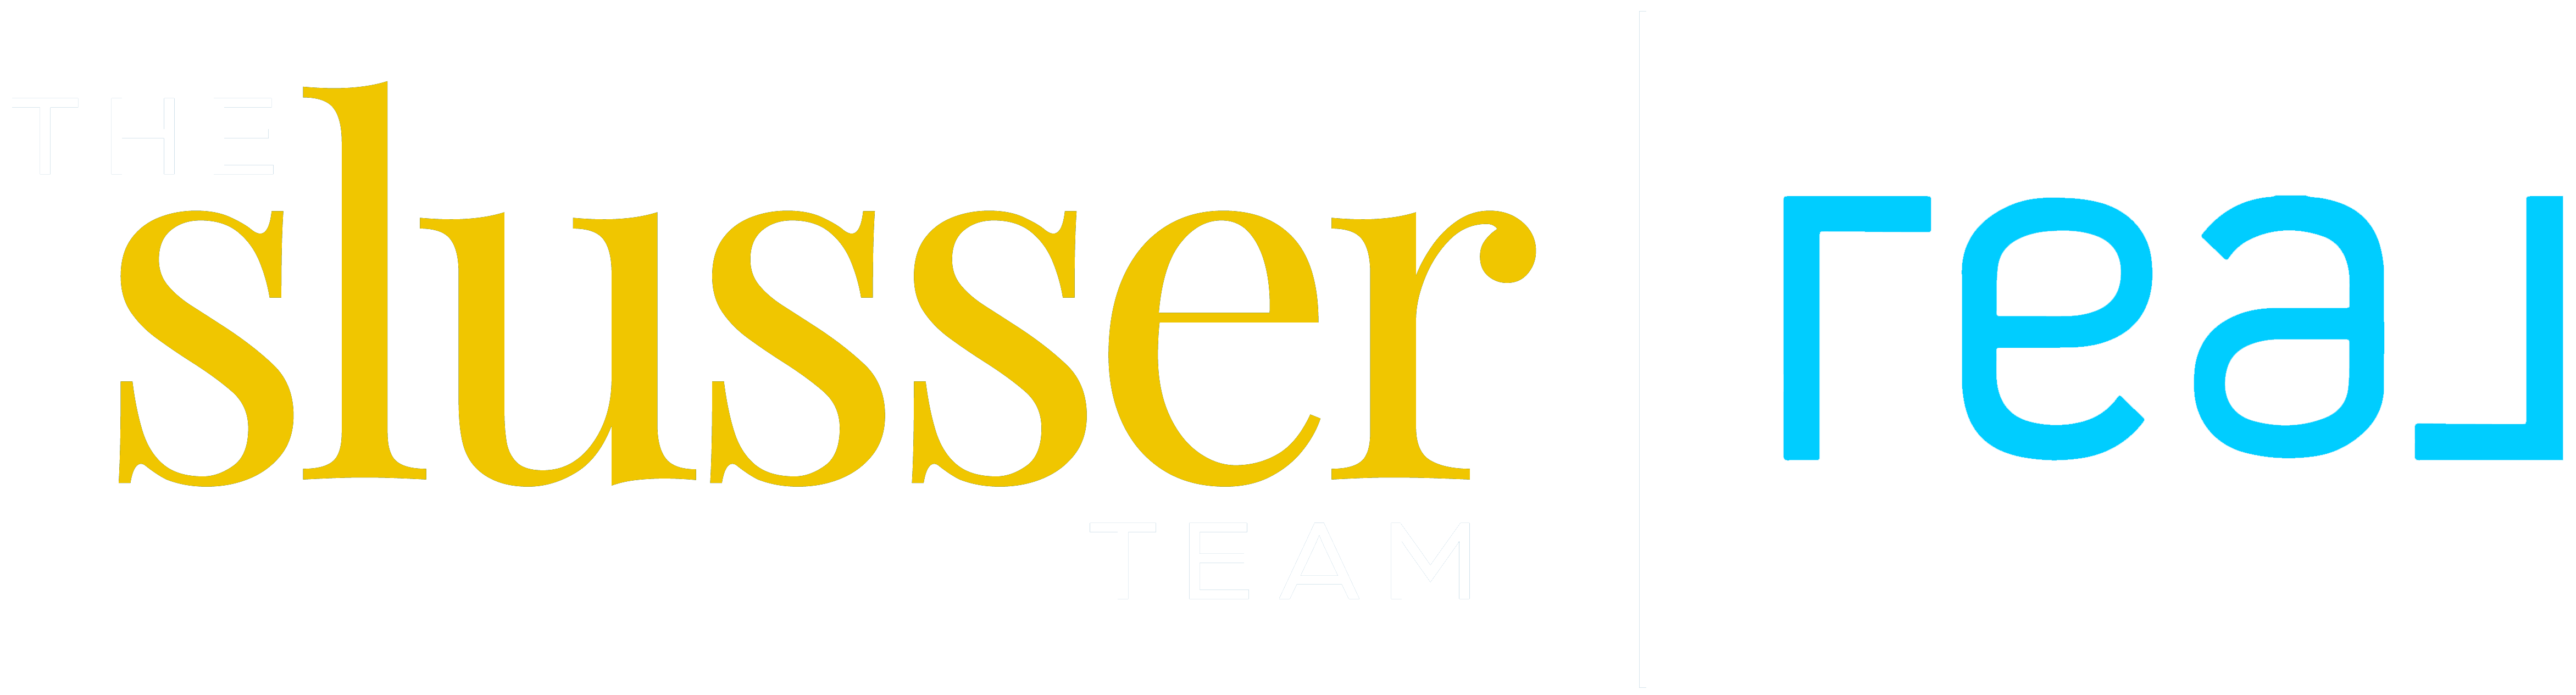 The Slusser Team at REAL